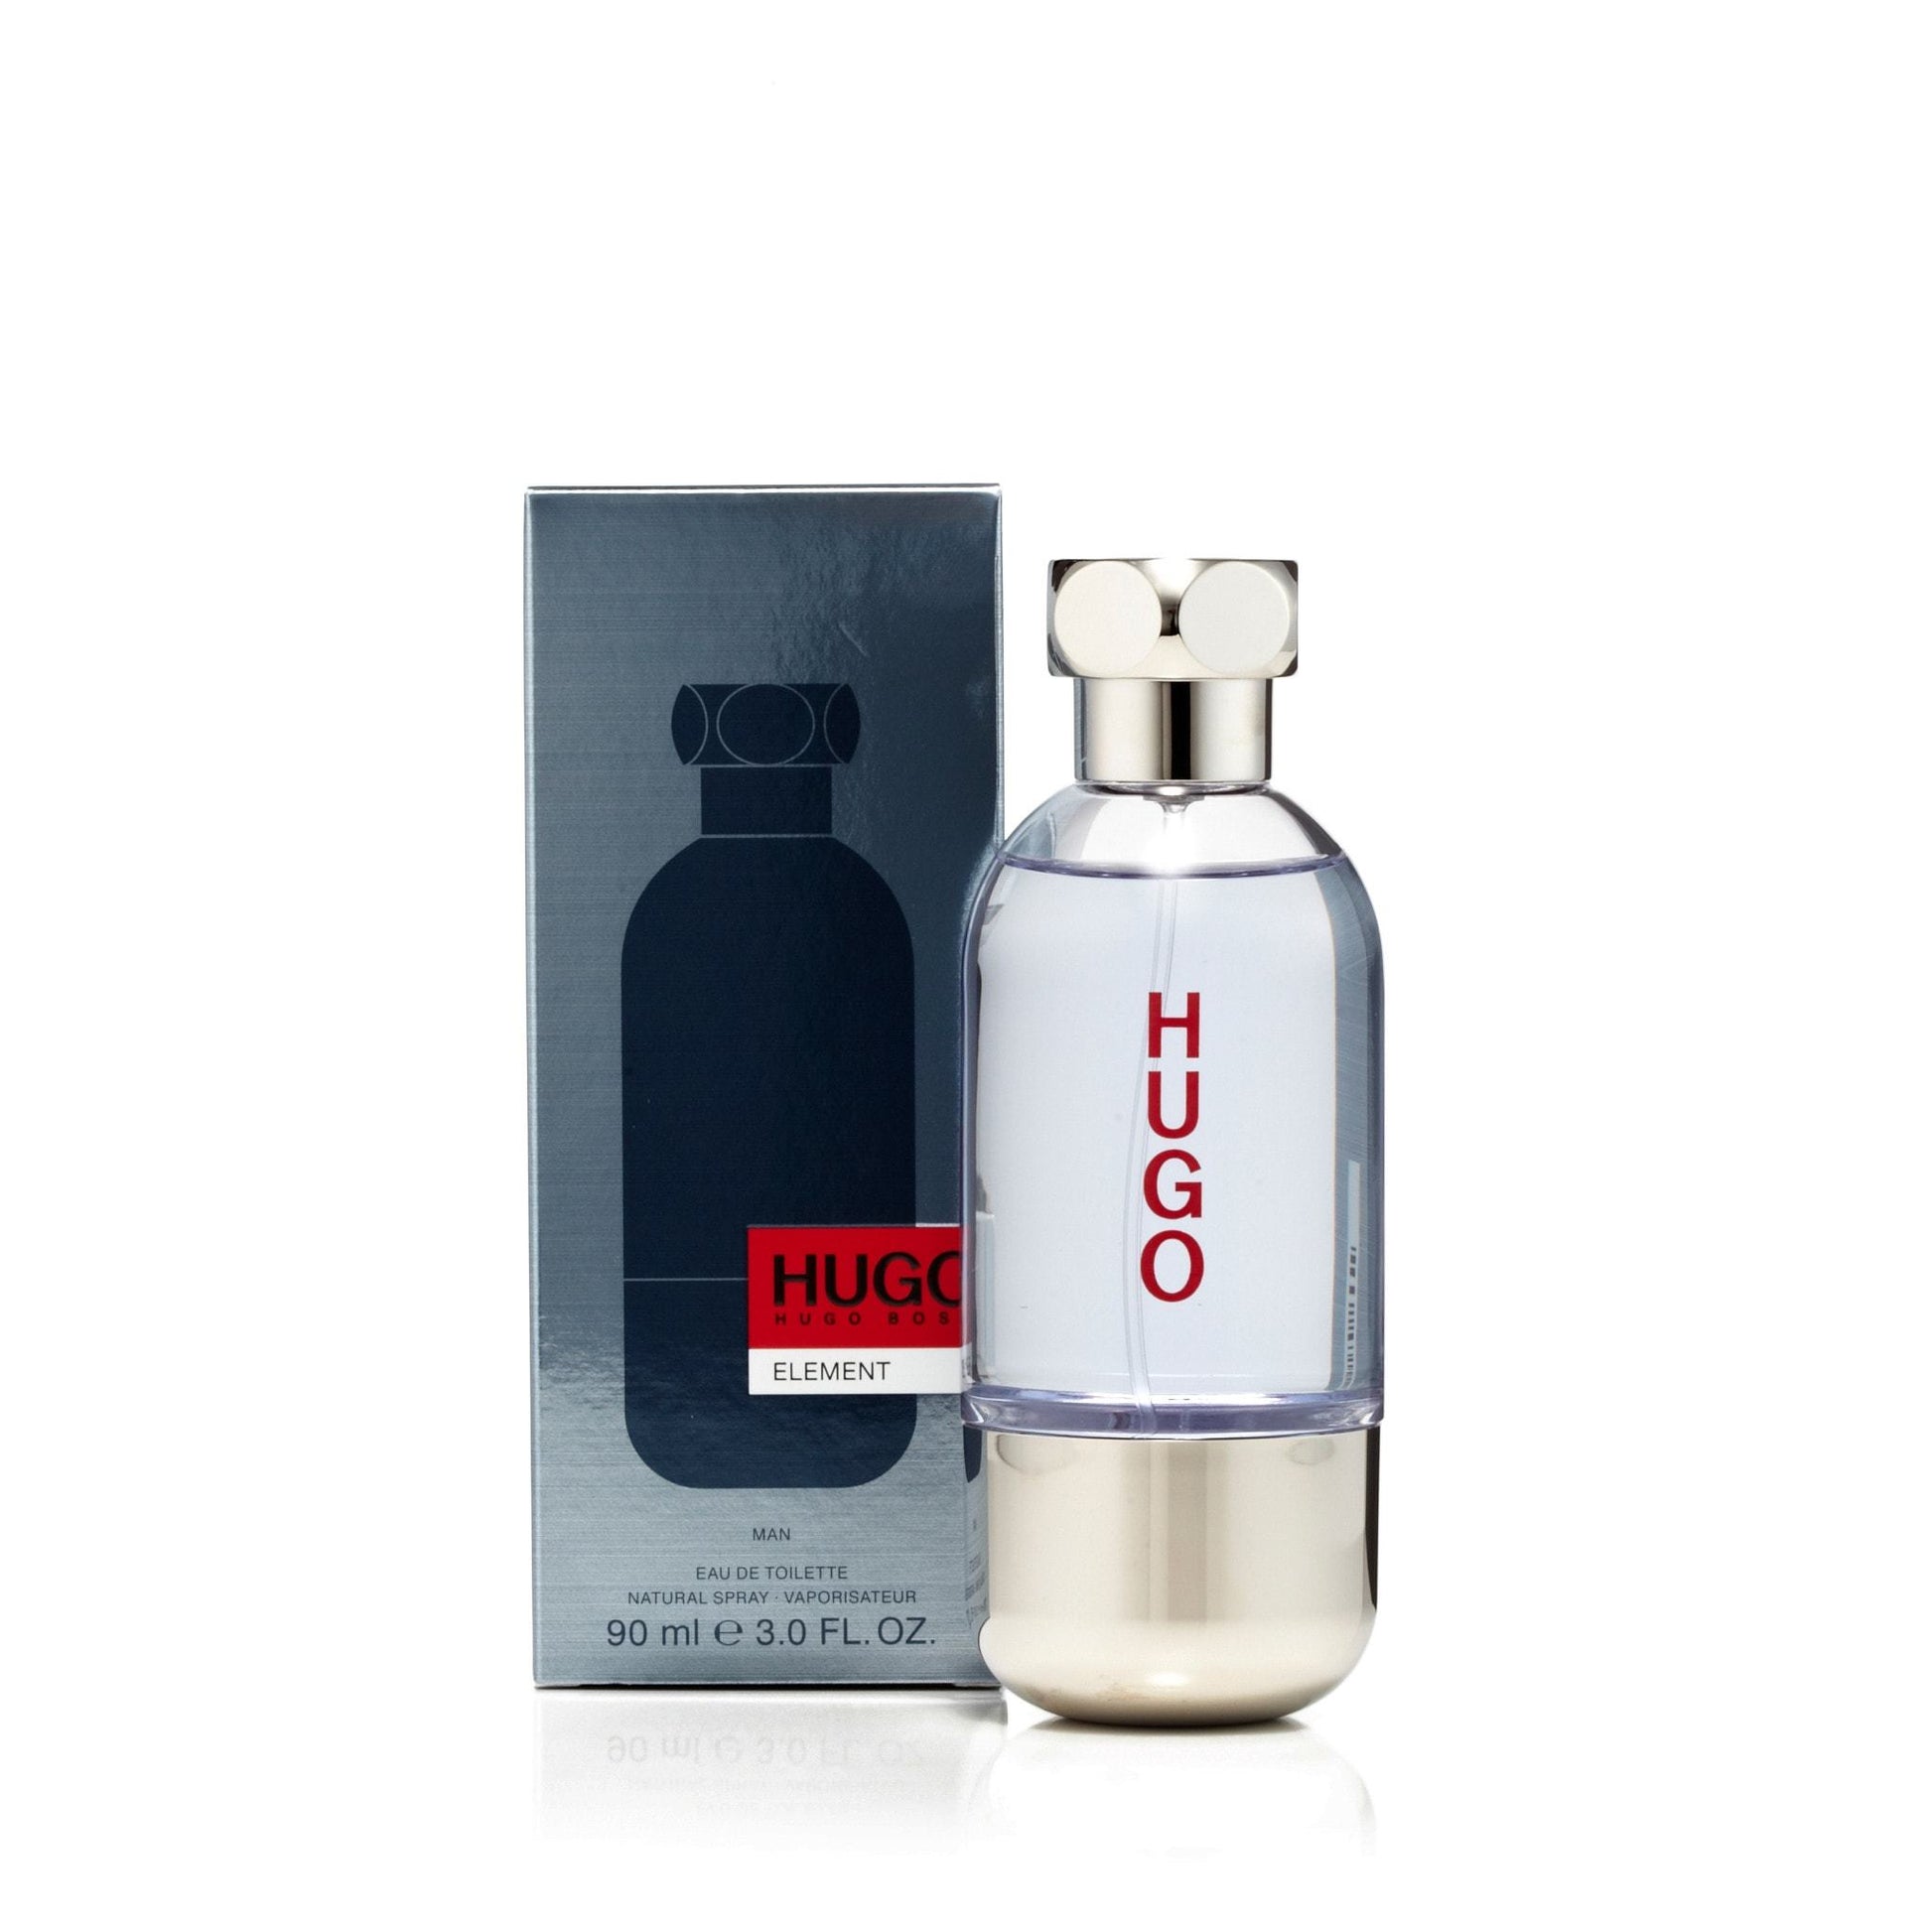 Hugo Boss Element Eau de Toilette Spray for Men by Hugo Boss, Product image 4